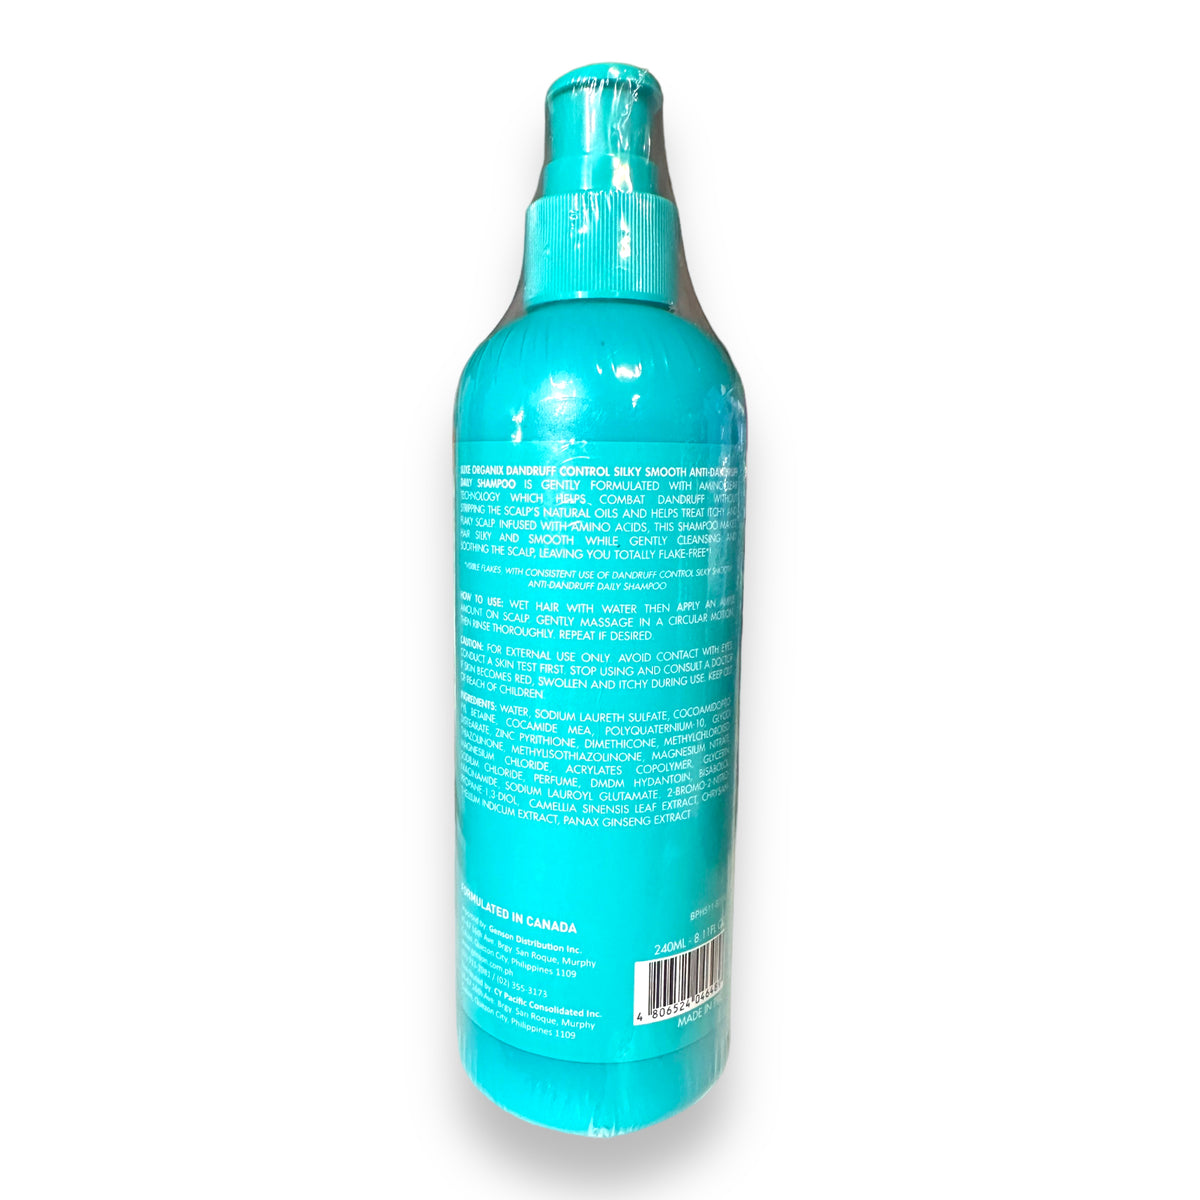 LUXE ORGANIX - Dandruff Control Silky Smooth Shampoo 240ml